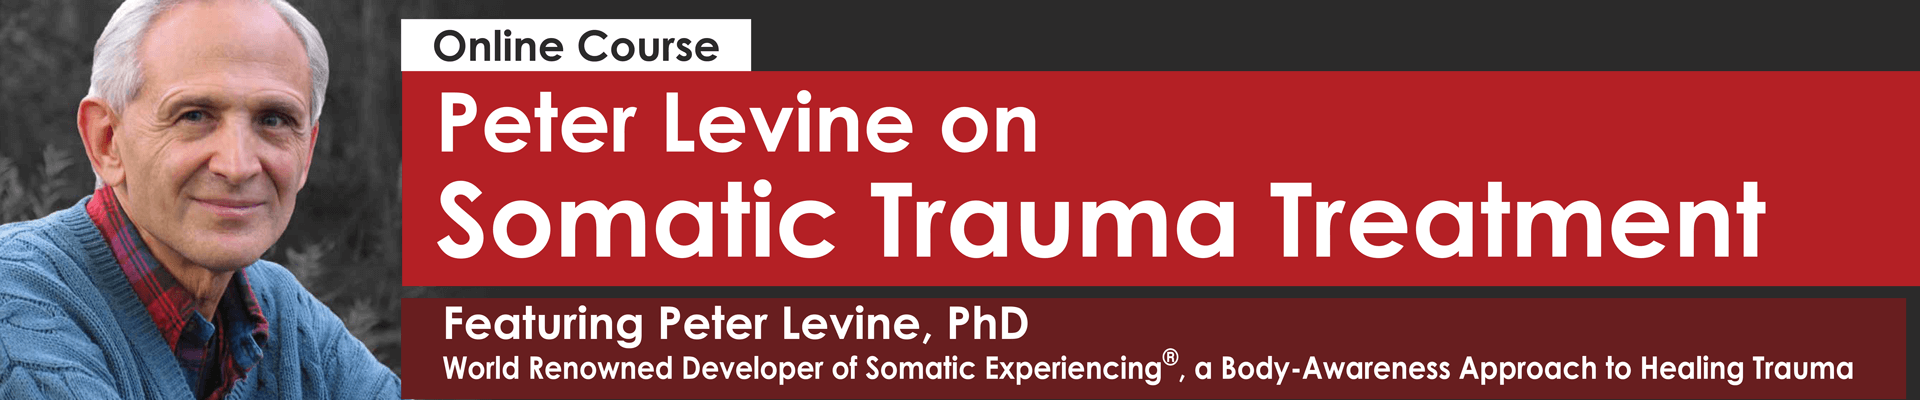 Peter Levine – Peter Levine on Somatic Trauma Treatment (1)